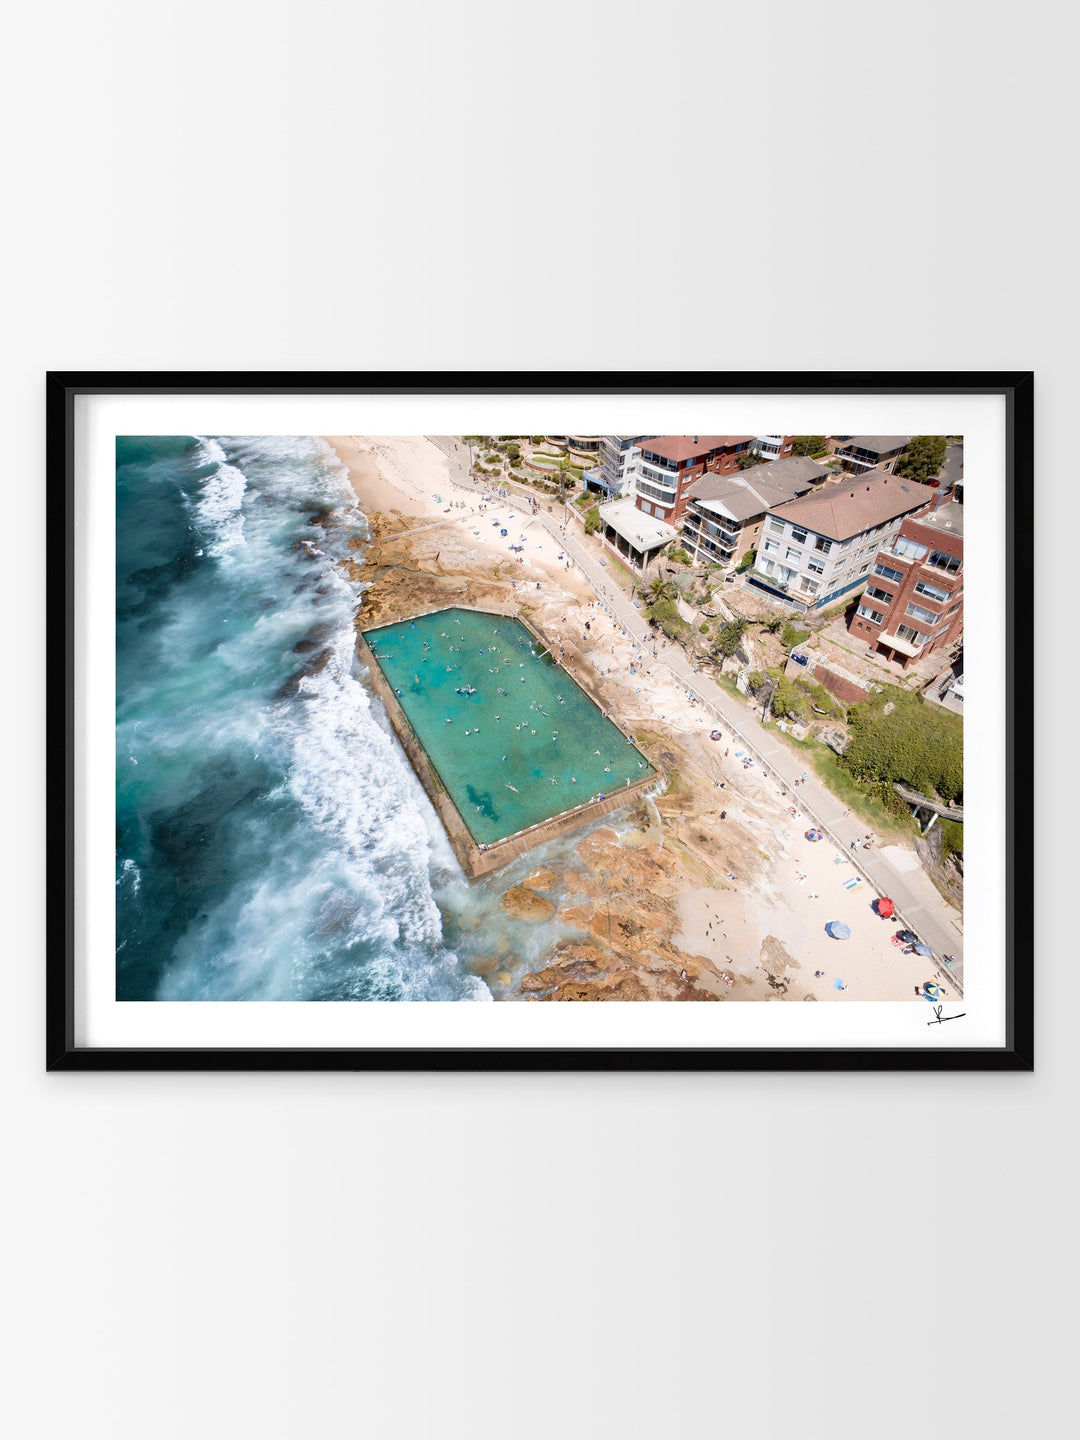 Cronulla pool 05 (southern bath) - Wall Art Print - Australia Unseen